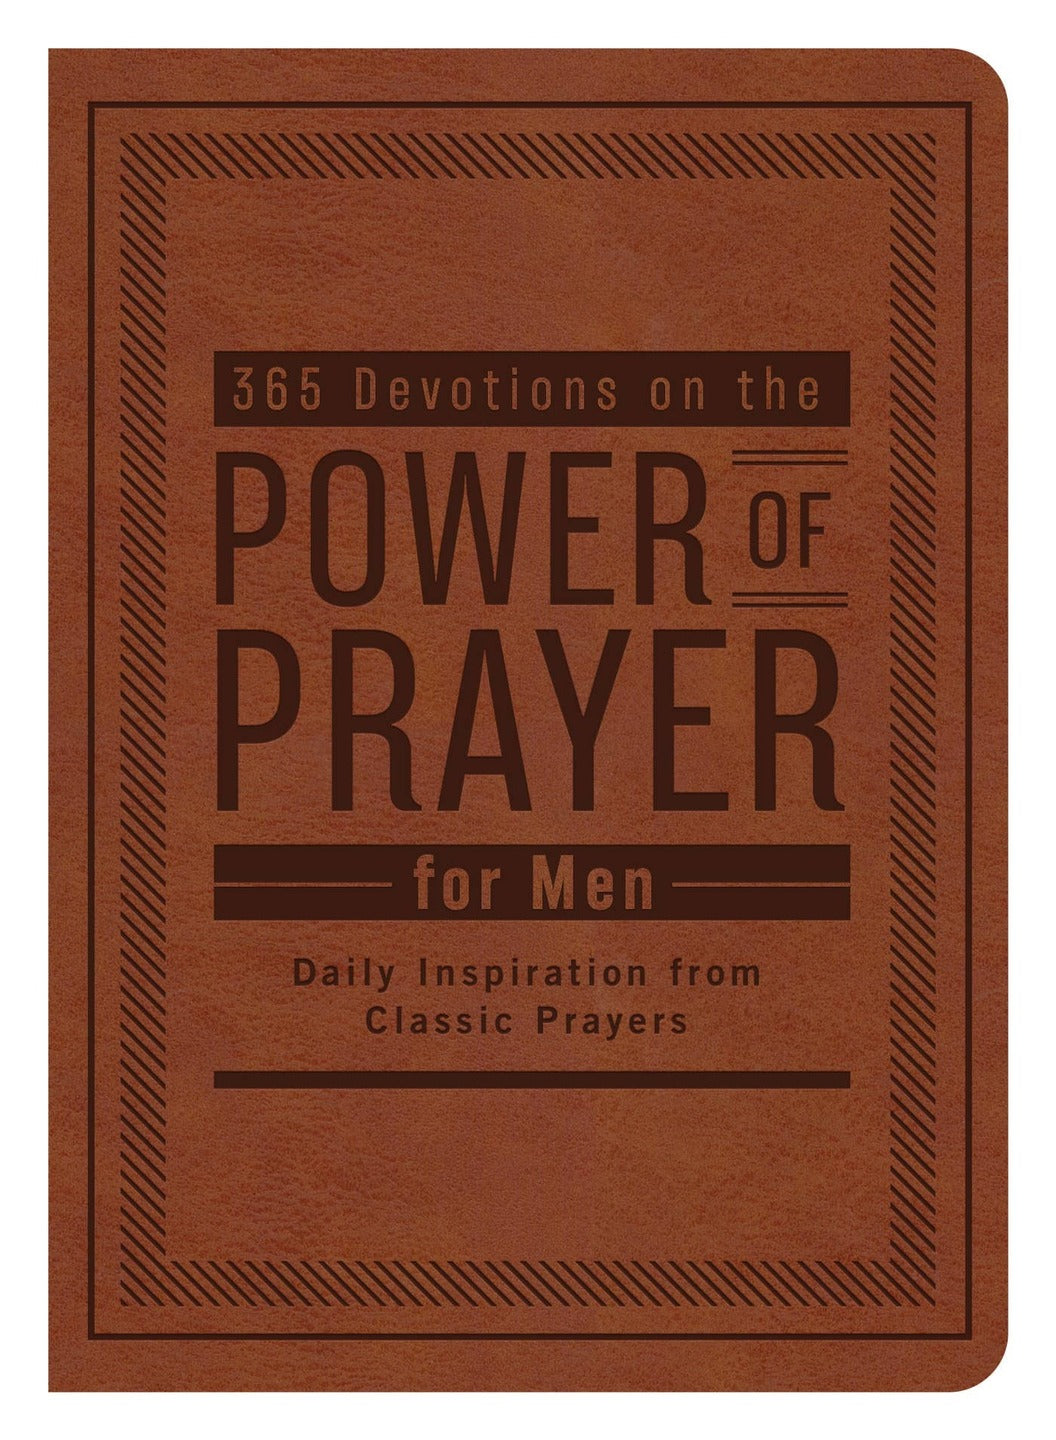 Barbour Publishing, Inc. - 365 Devotions on the Power of Prayer for Men